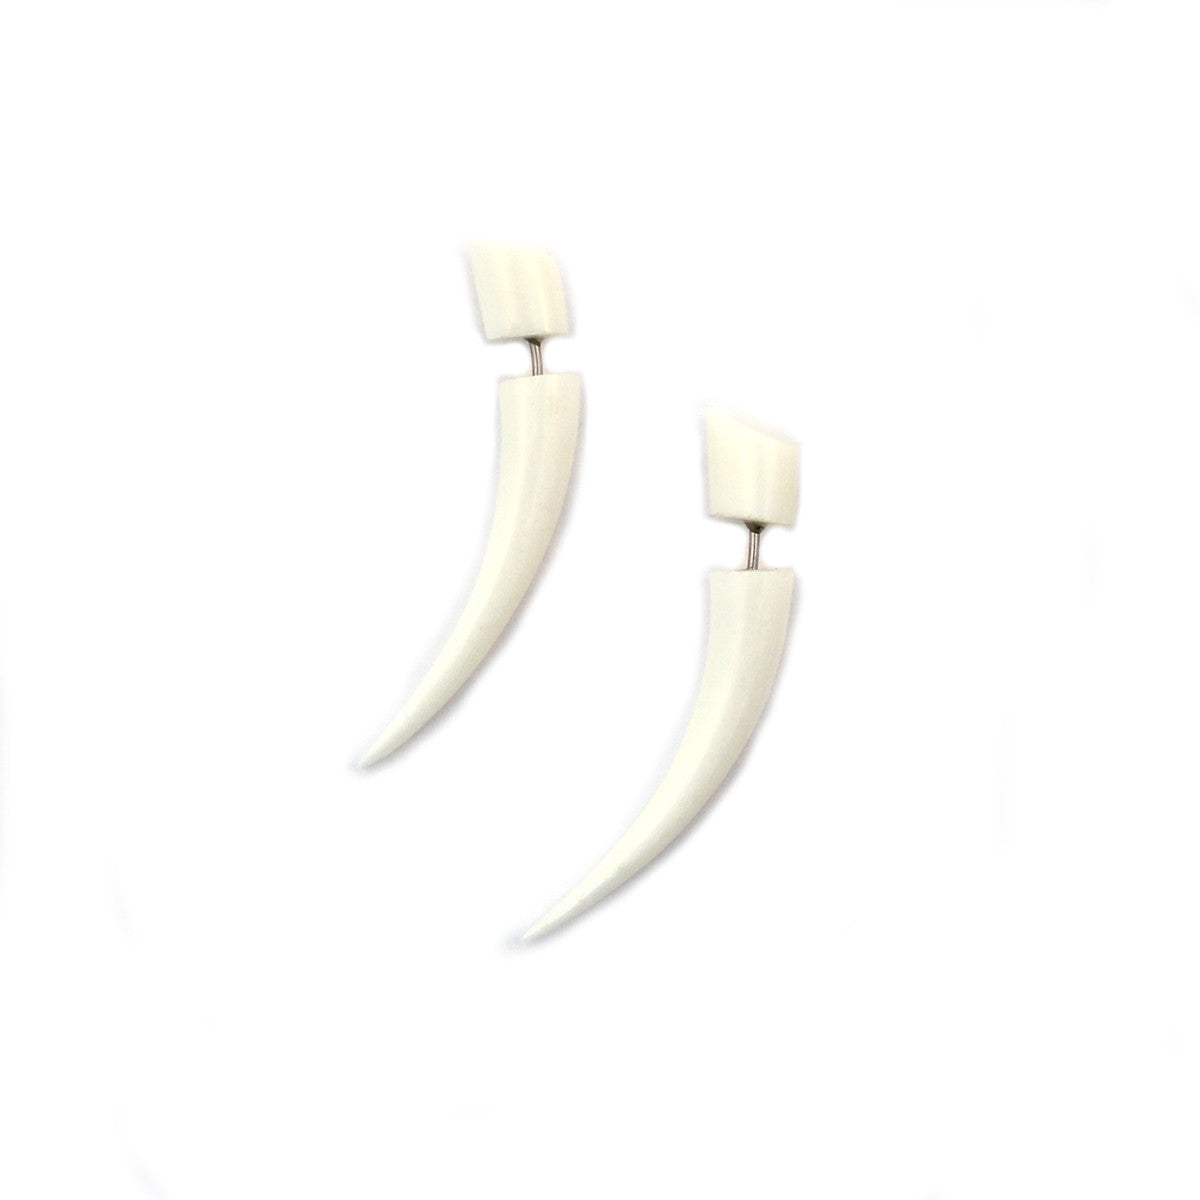 Carved Bone Earrings - Spikes